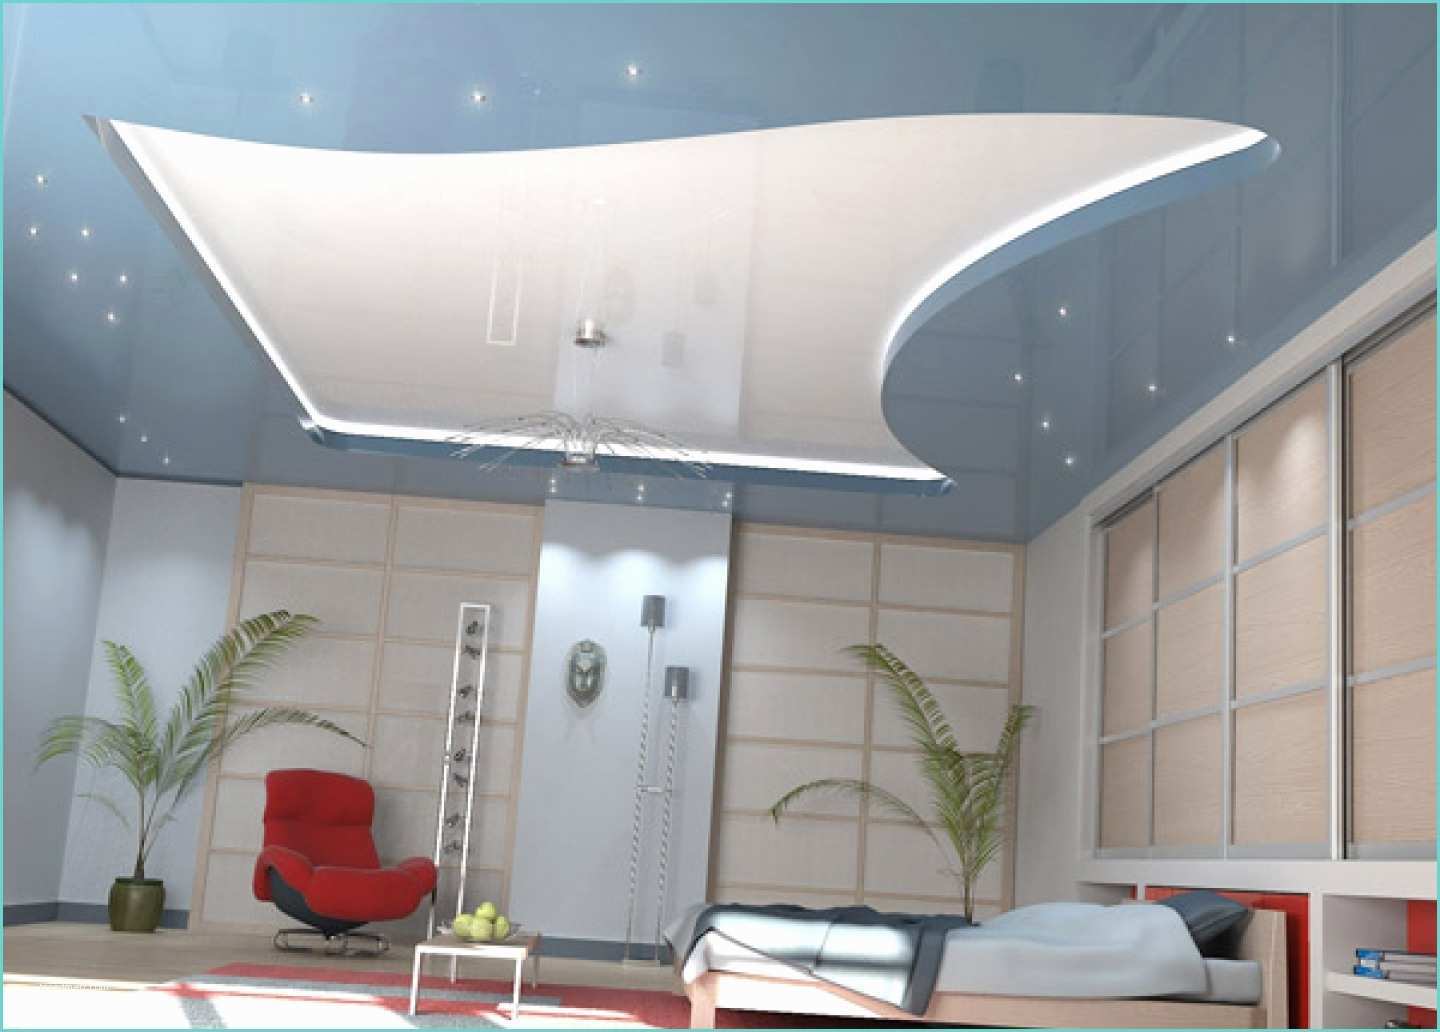 Plaster Of Paris Designs for Roof Bed Room Roof Plaster Paris Ceiling Designs Home Bo